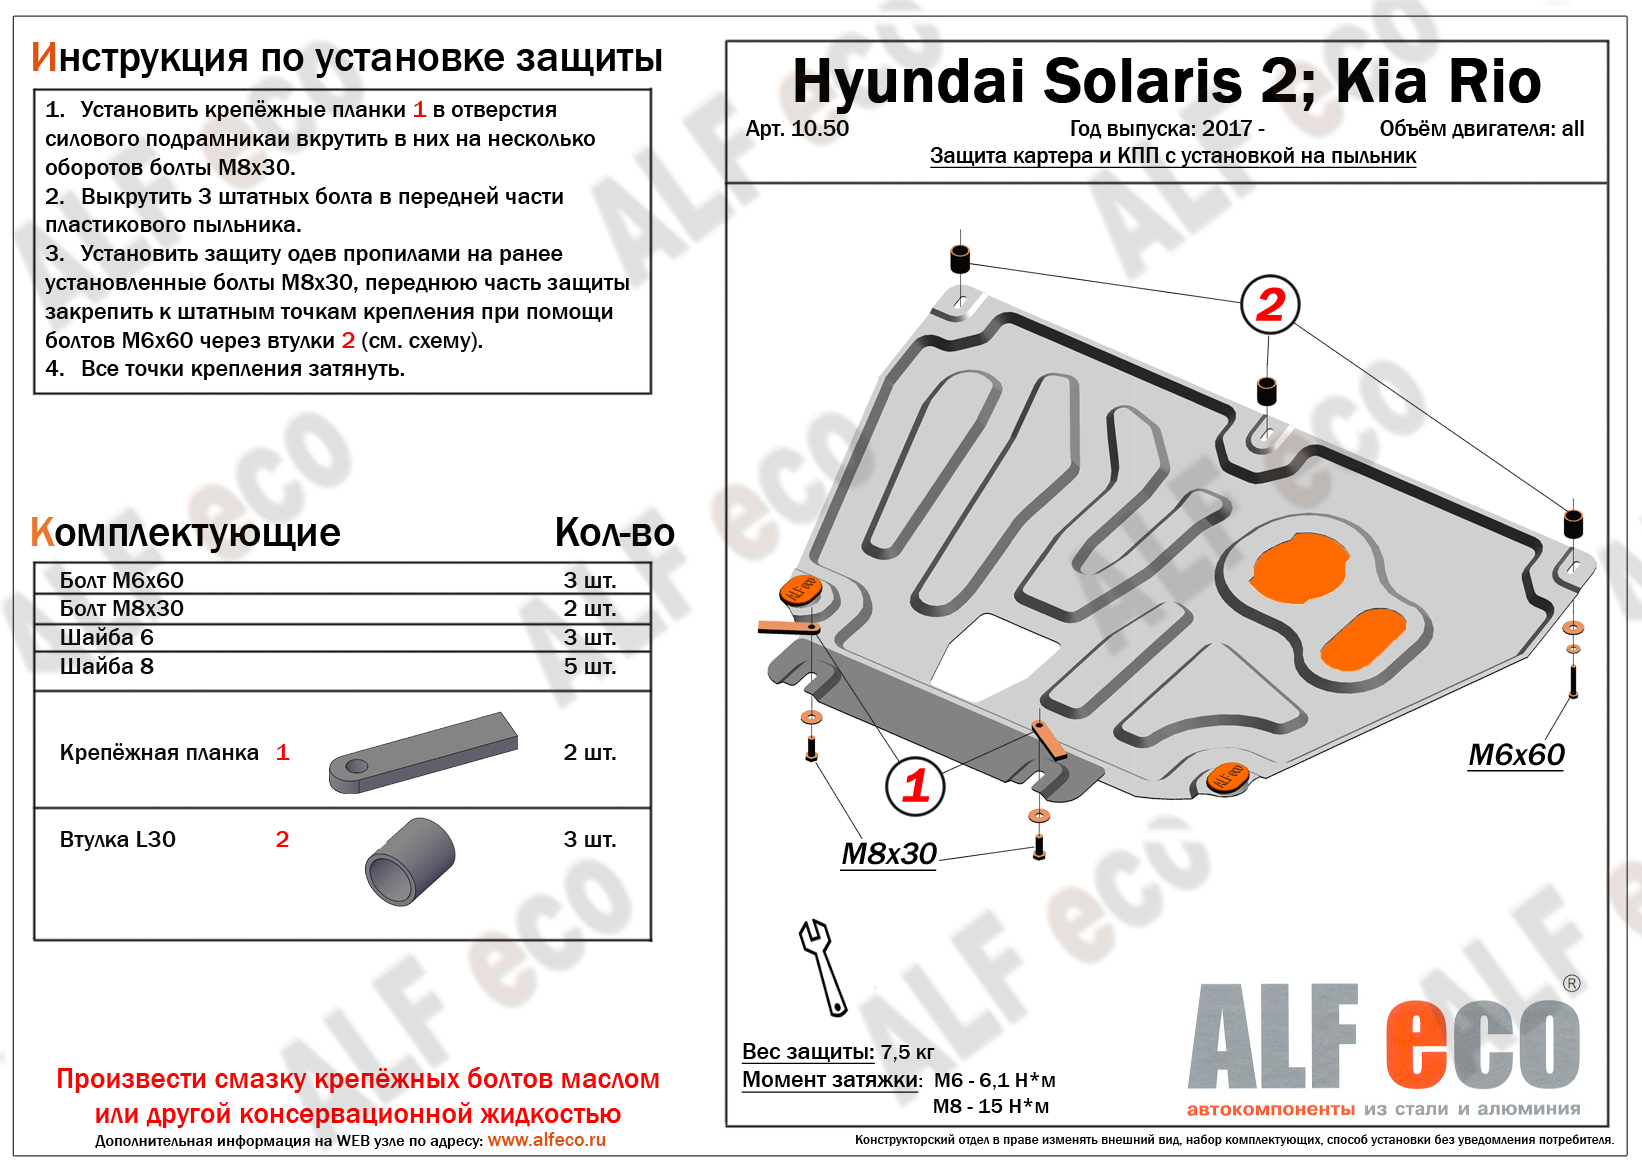 Kia Rio X-Line / Hyundai Solaris/(2017-) защита картера и кпп штамповка 2мм (установка на пыльник)